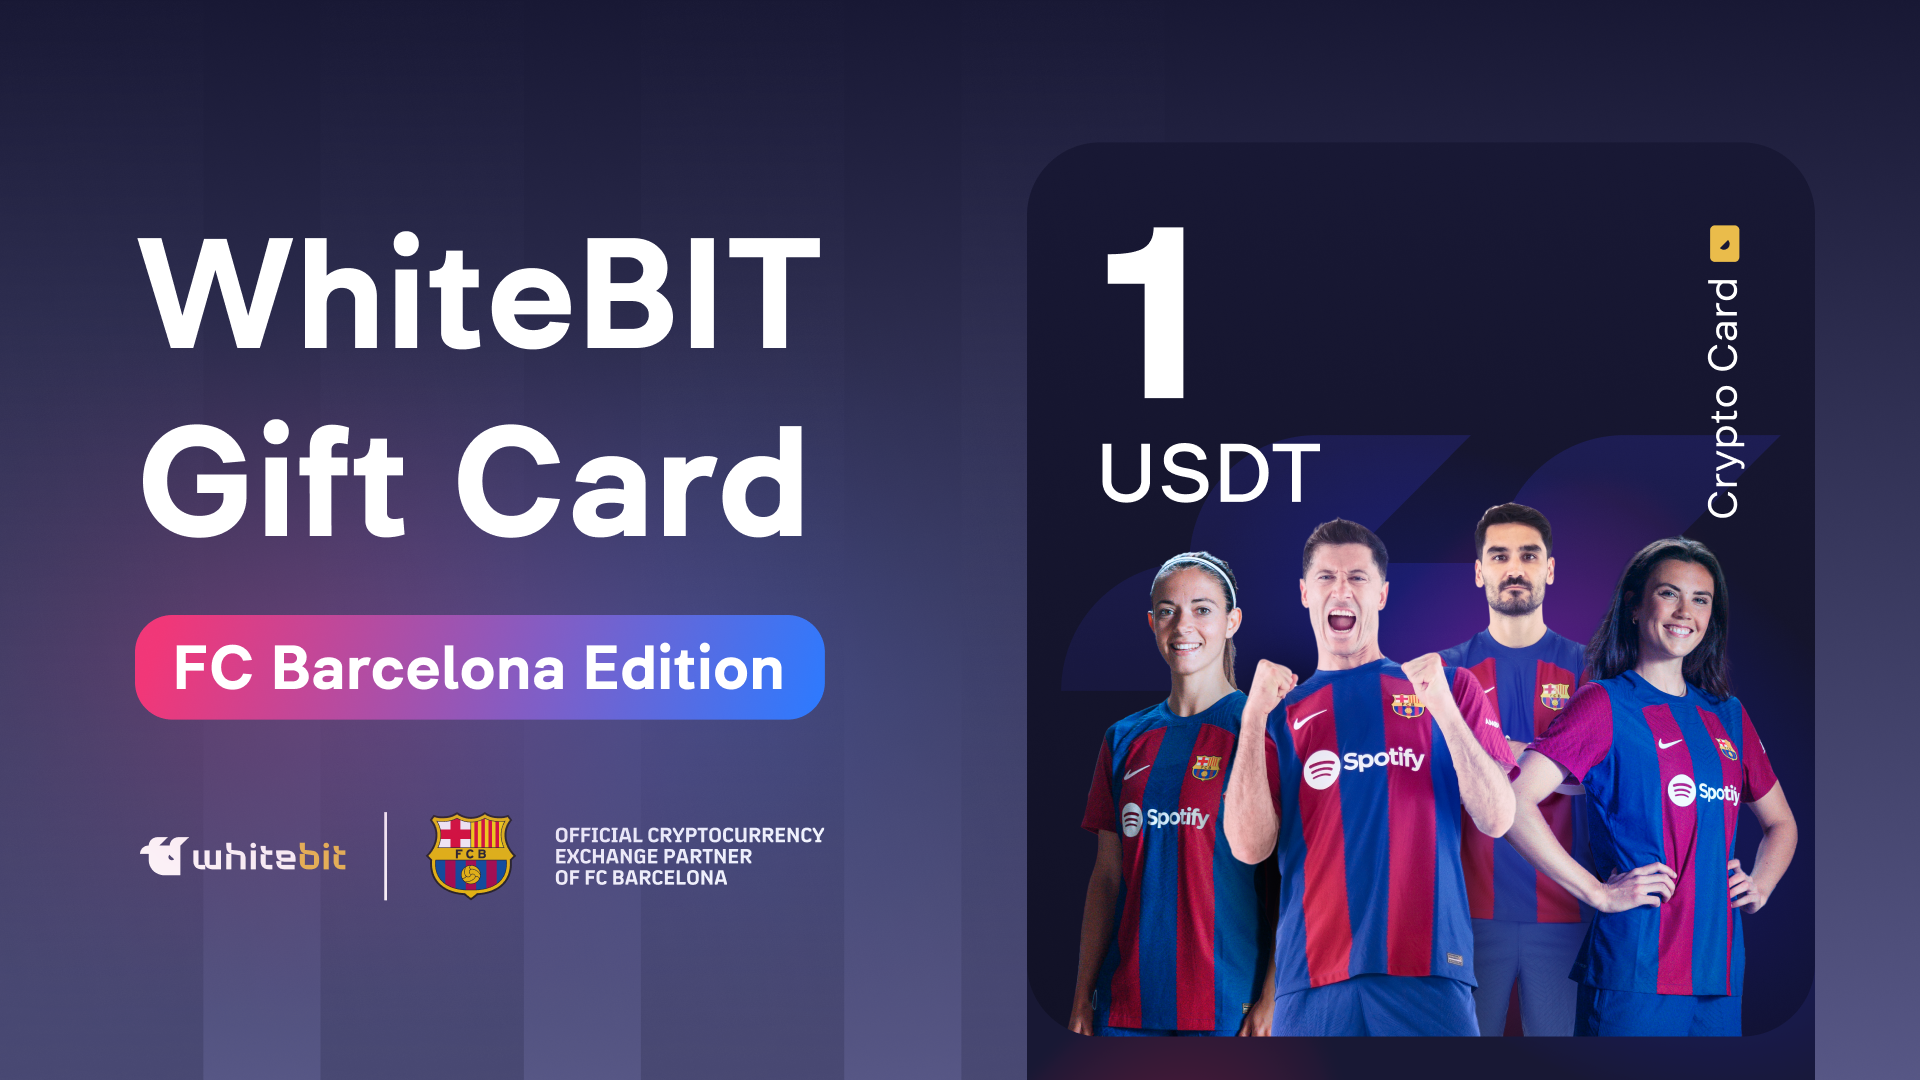 WhiteBIT - FC Barcelona Edition - 1 USDT Gift Card [USD 1.39]